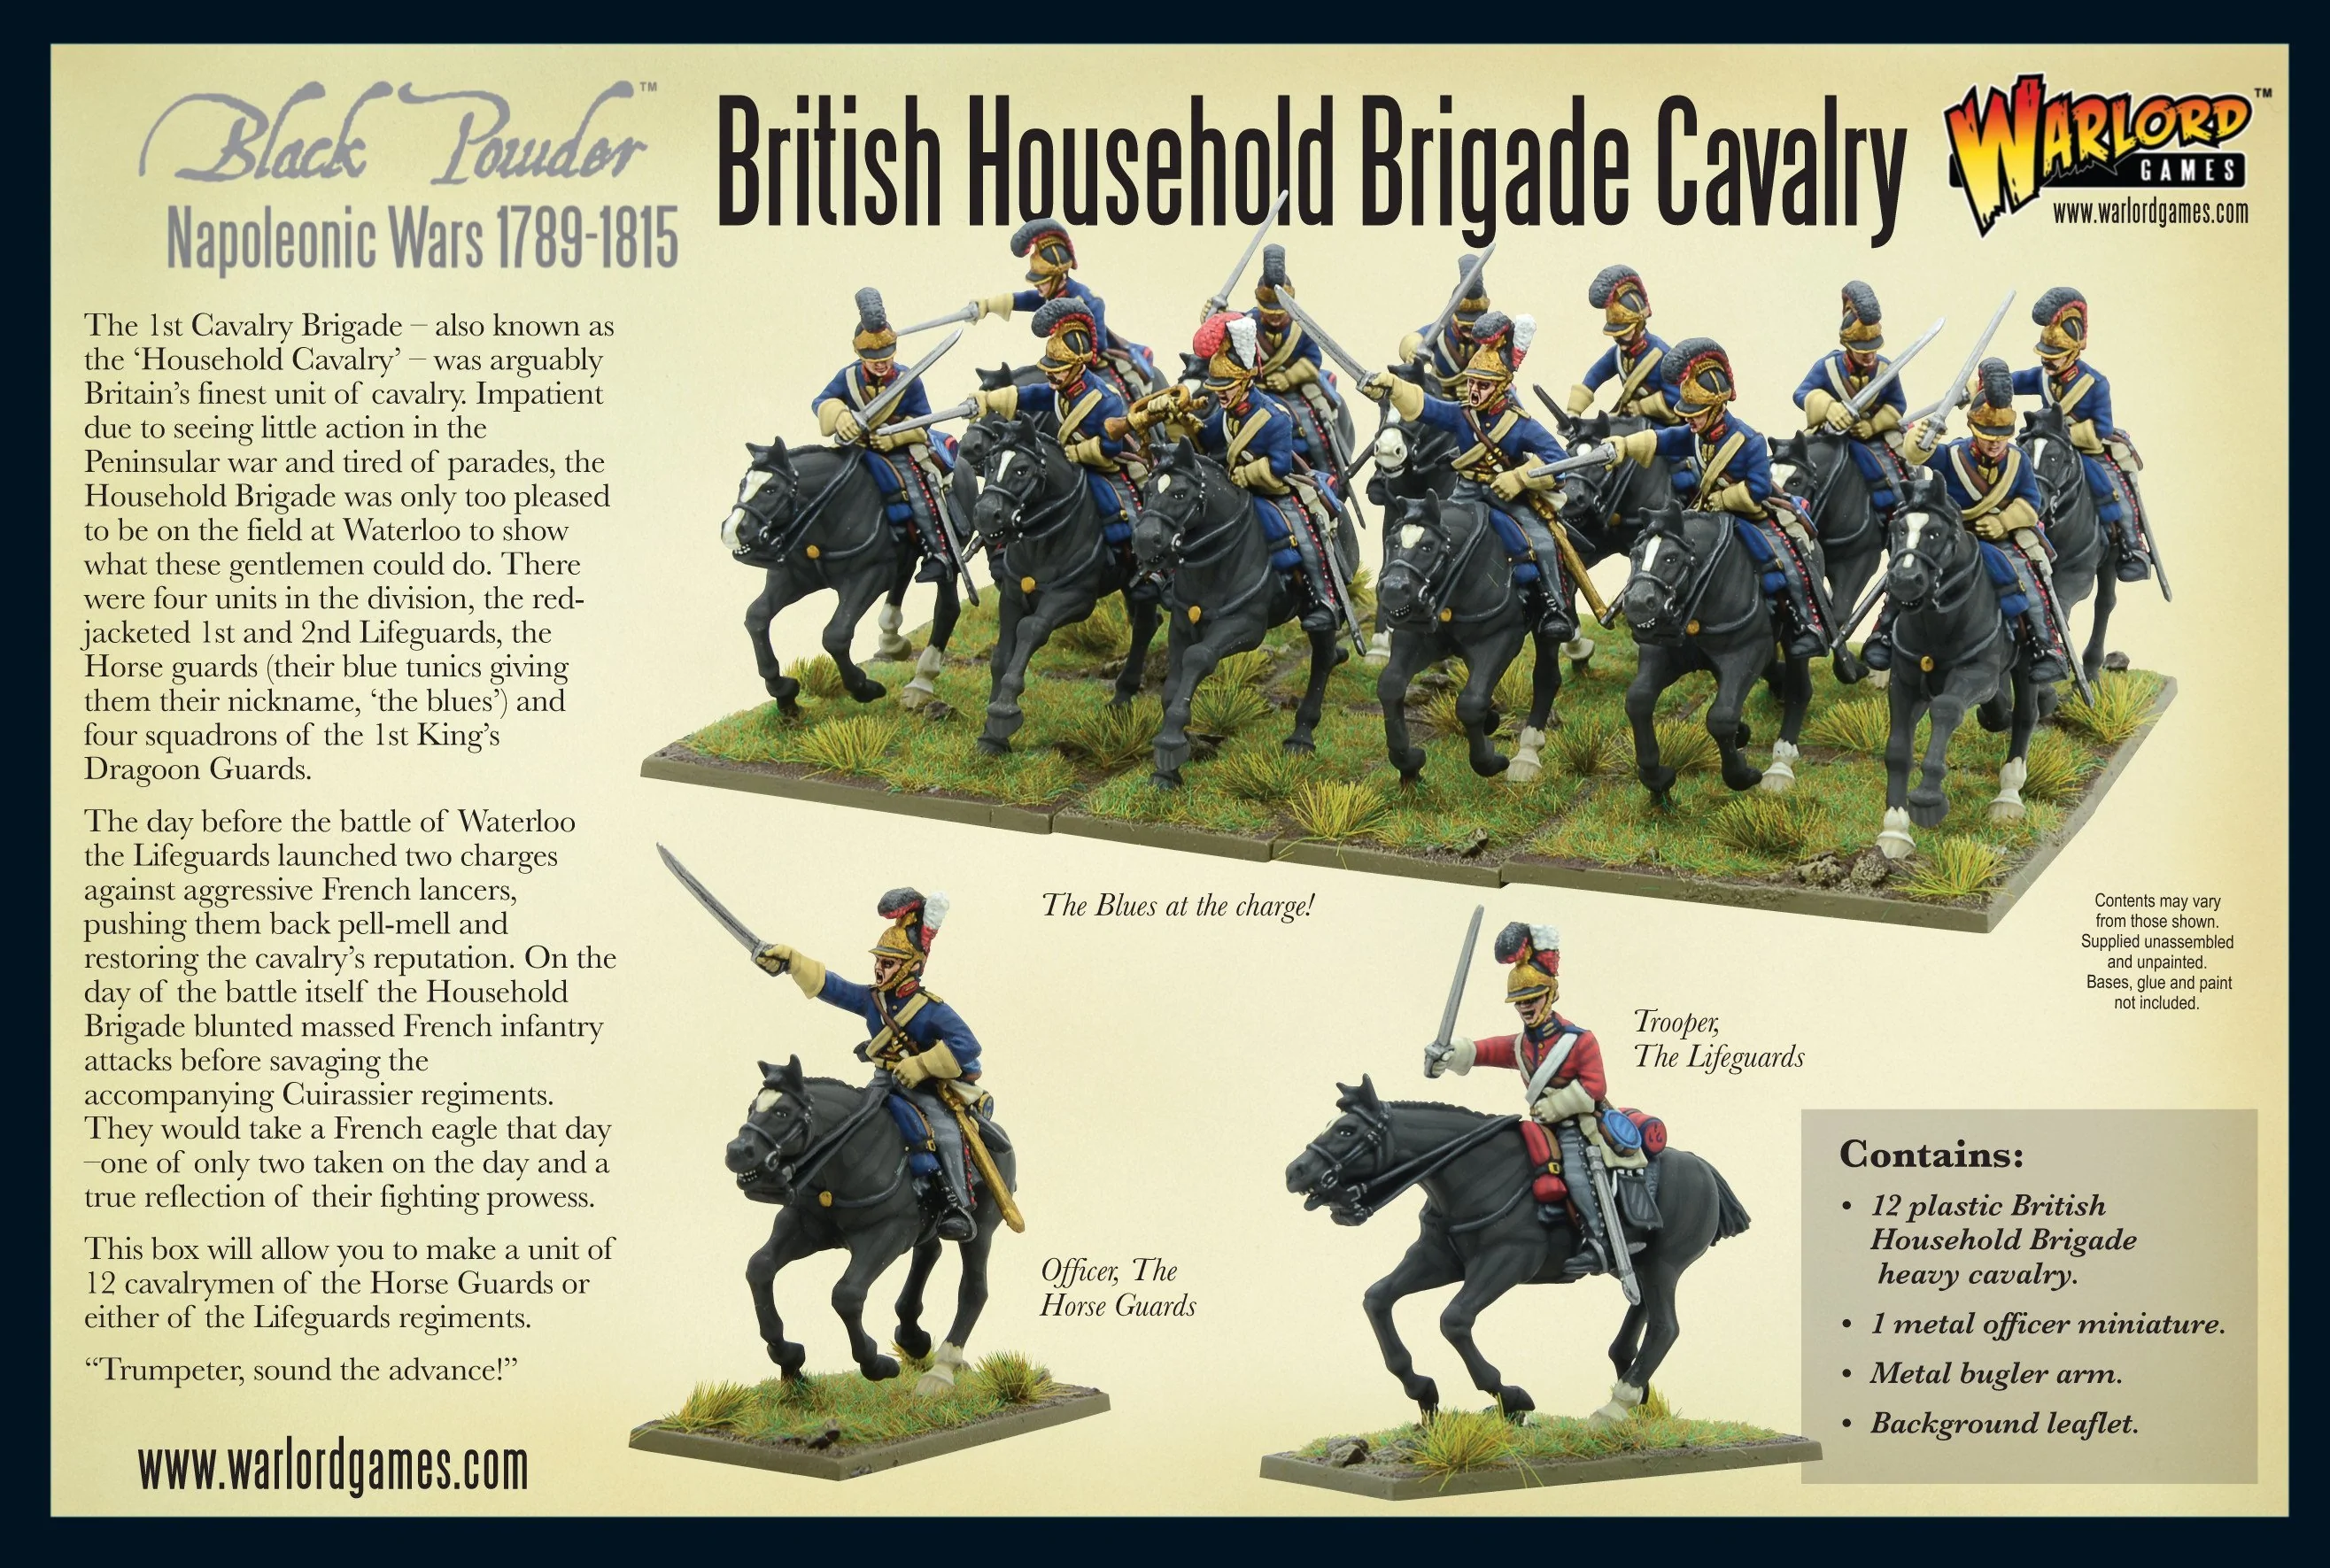 302011001_British_Household_Brigade_Cavalry_box_back